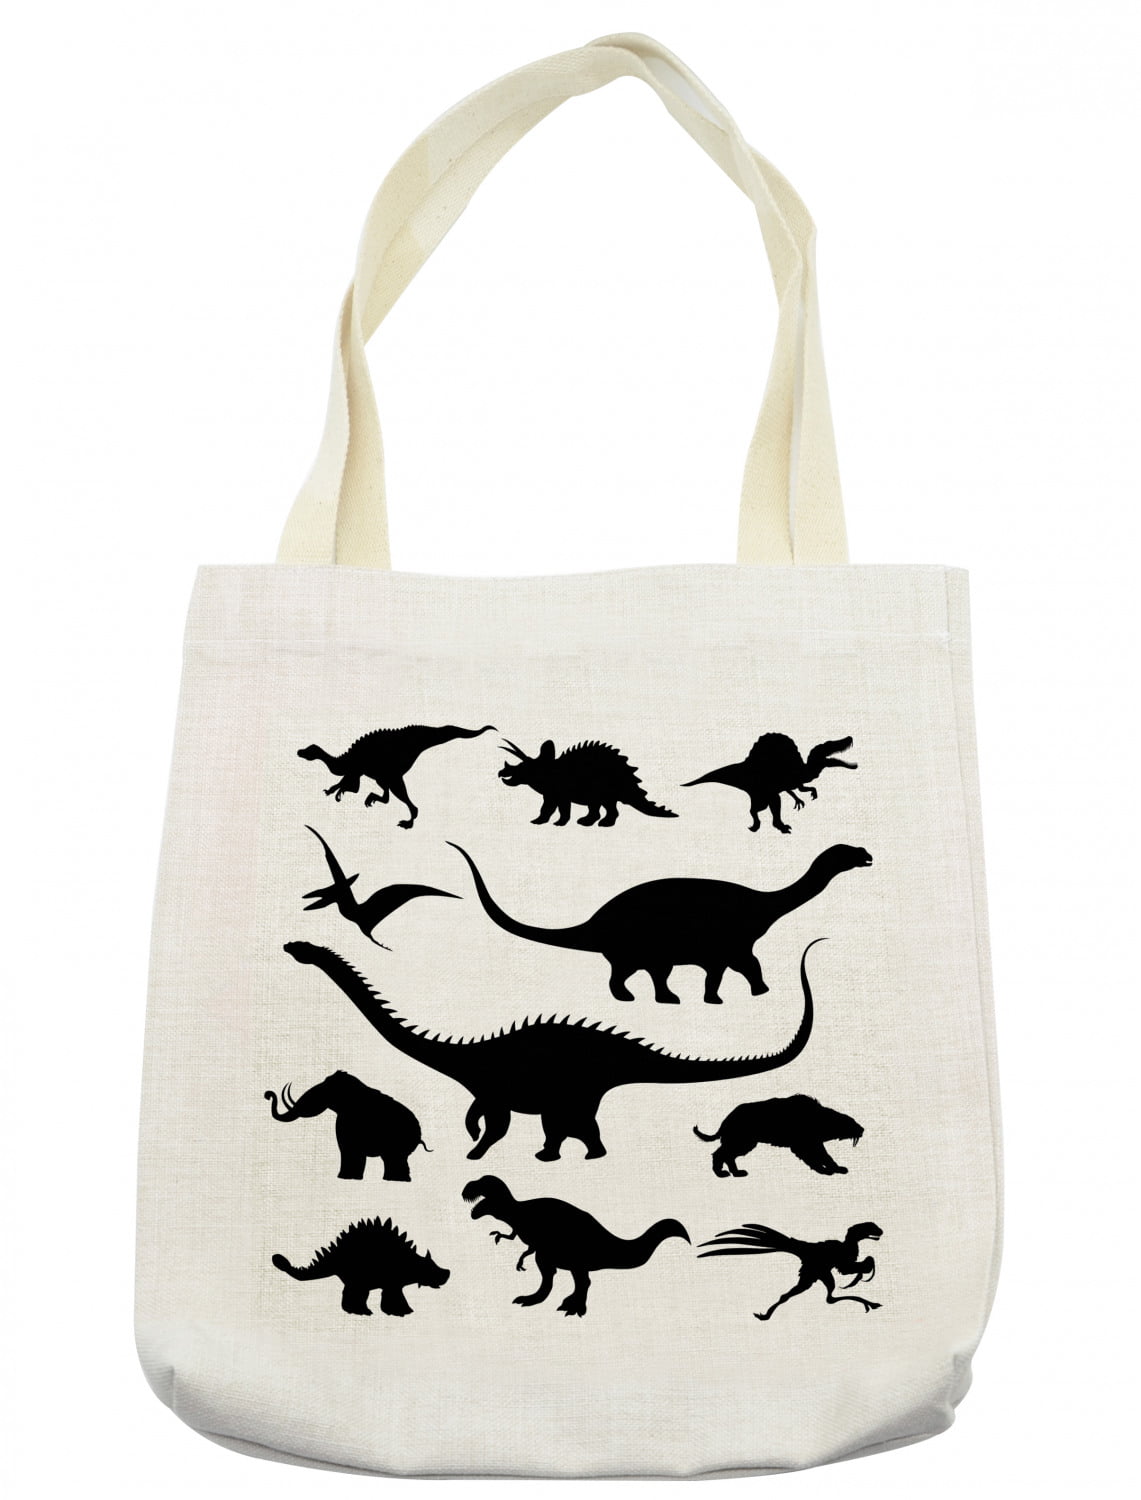 Dinosaur Tote \u00a9 Boys Book Bag Dinosaur Gift Kids/' Library Bag Library Bag Kindness Little Boy Gift Canvas Tote Bag for Kids